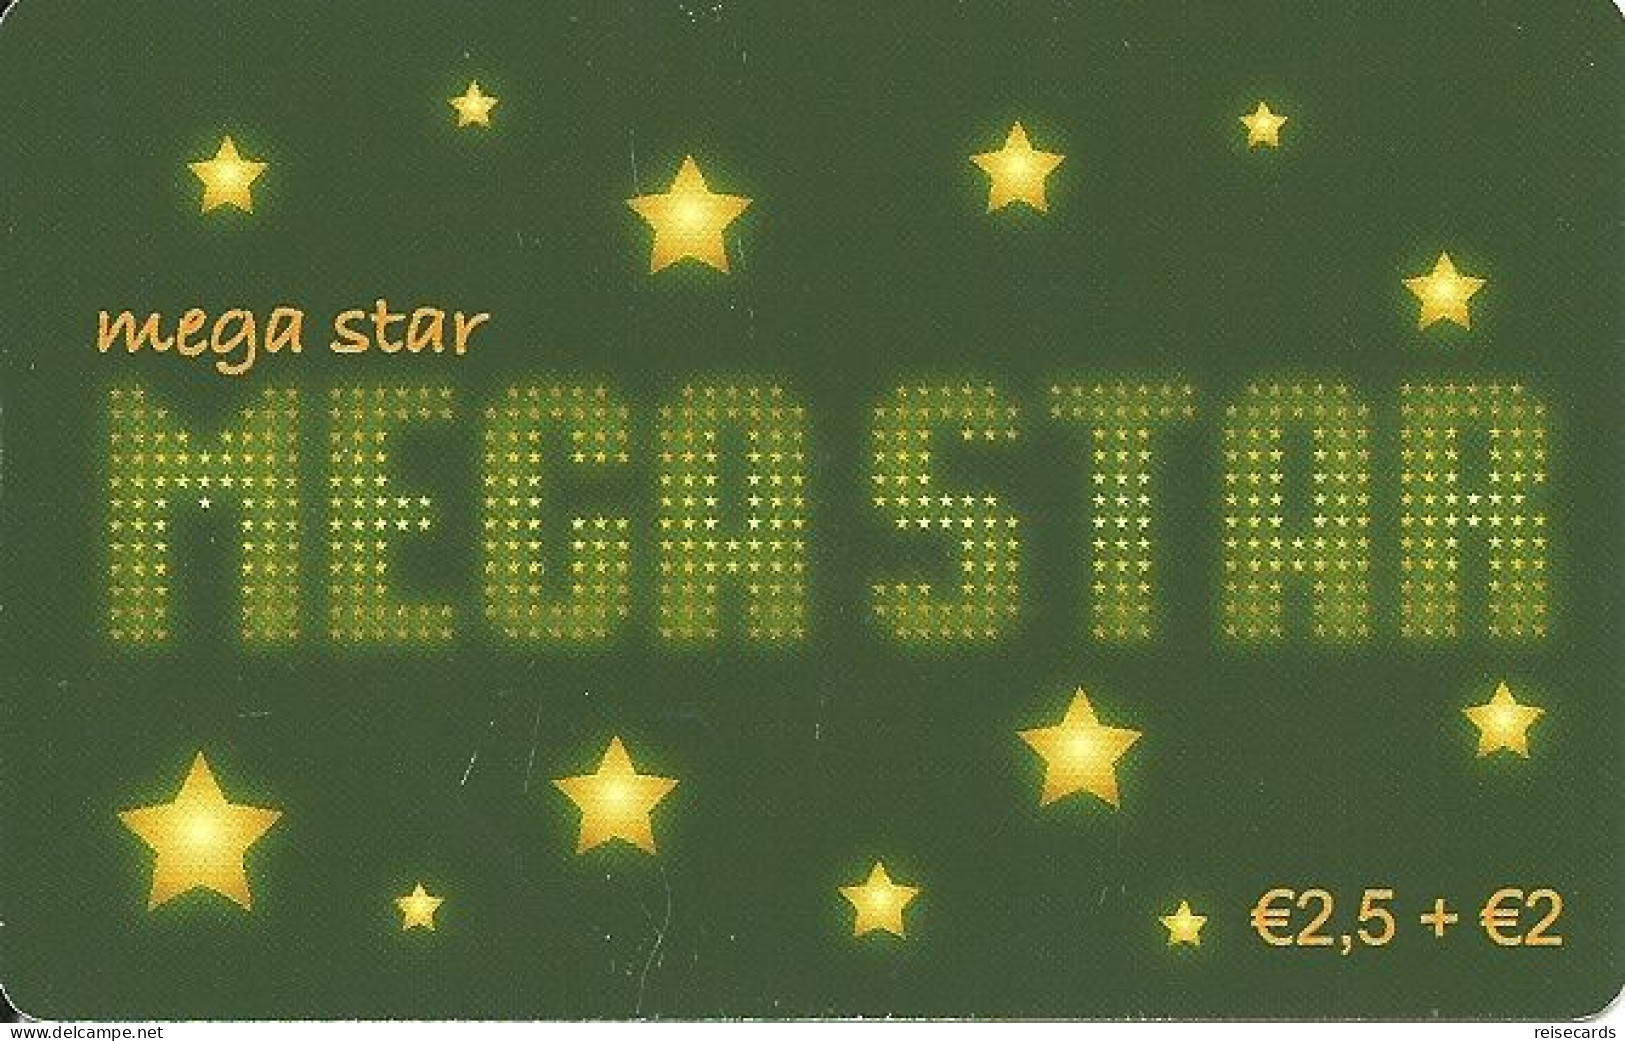 Germany: Prepaid IDT Megastar 02.11 - Cellulari, Carte Prepagate E Ricariche